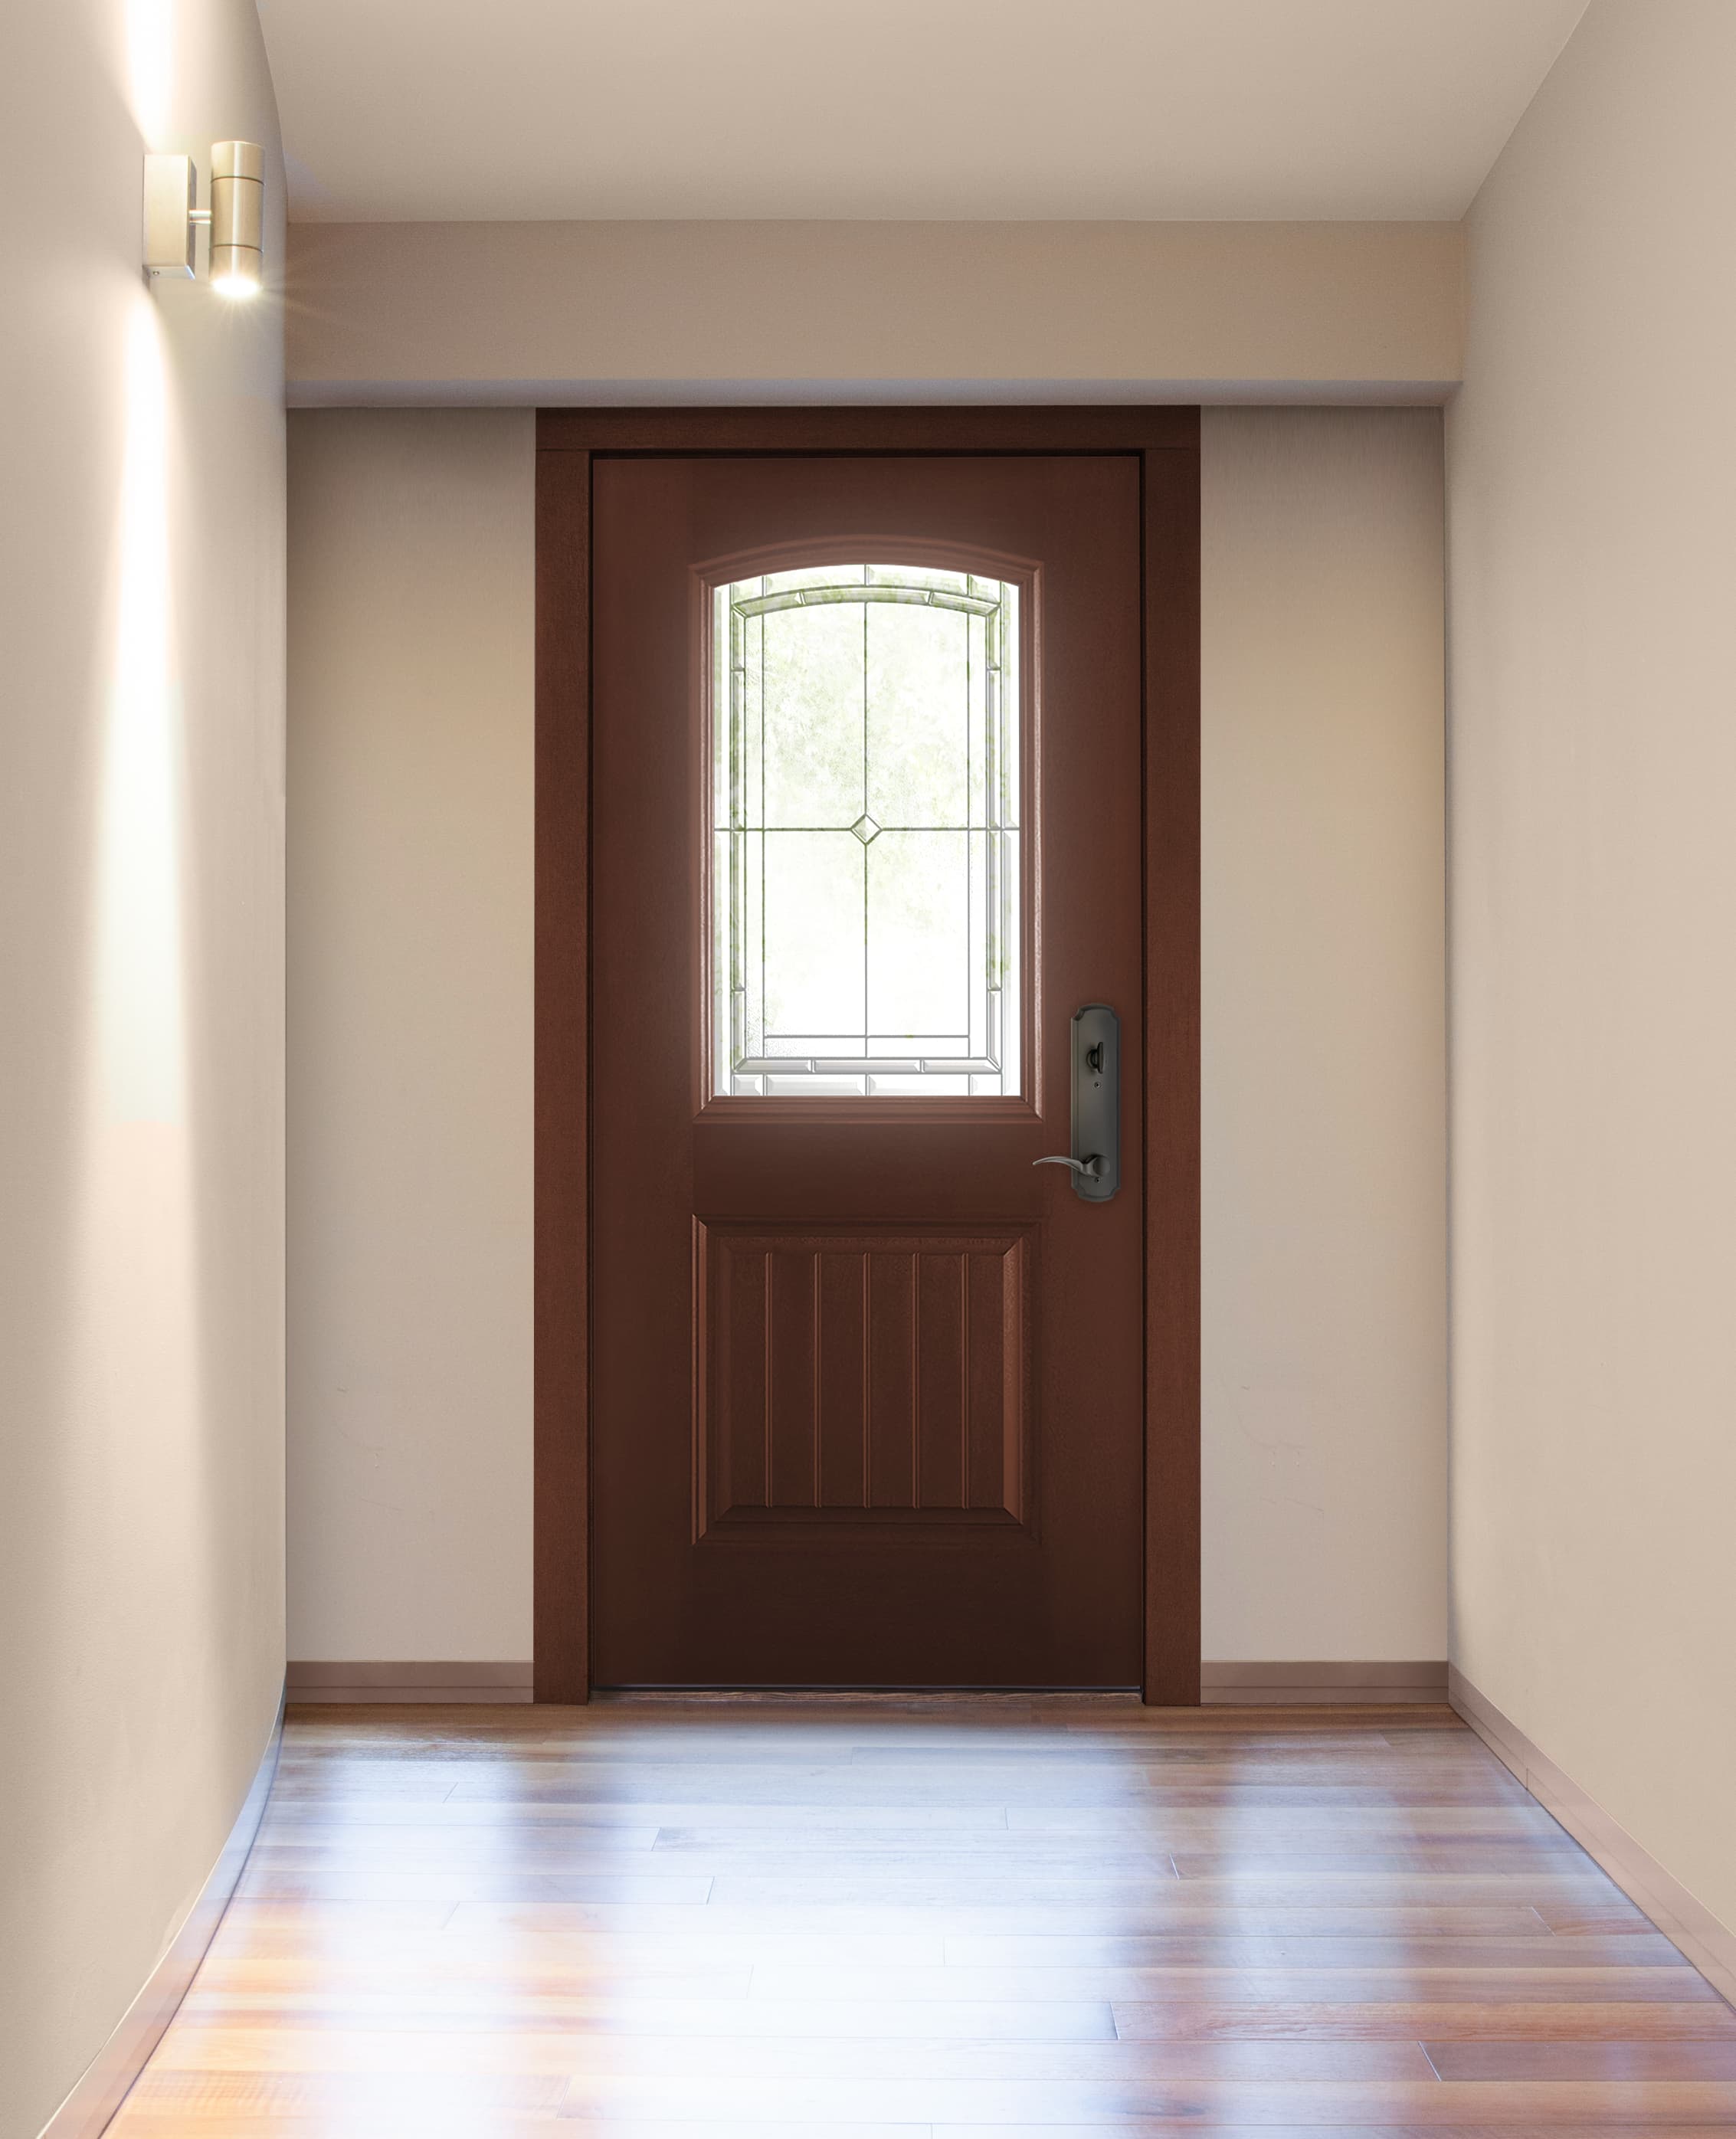 Brown fiberglass entry door with decorative glass